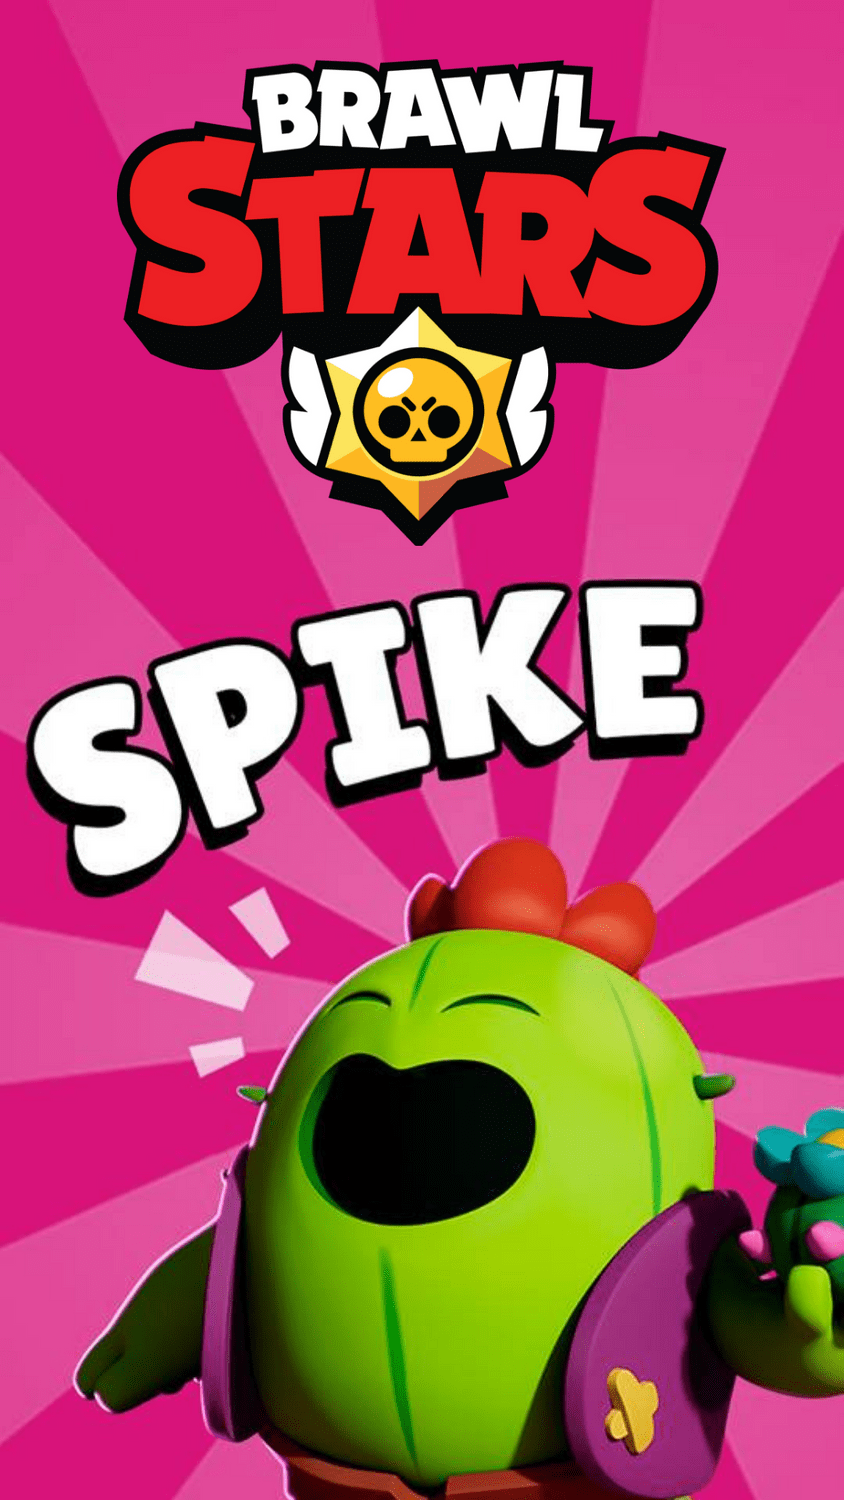 Spike Brawl Stars Wallpapers Top Free Spike Brawl Stars Backgrounds Wallpaperaccess - brawl stars spike wallpaper hd